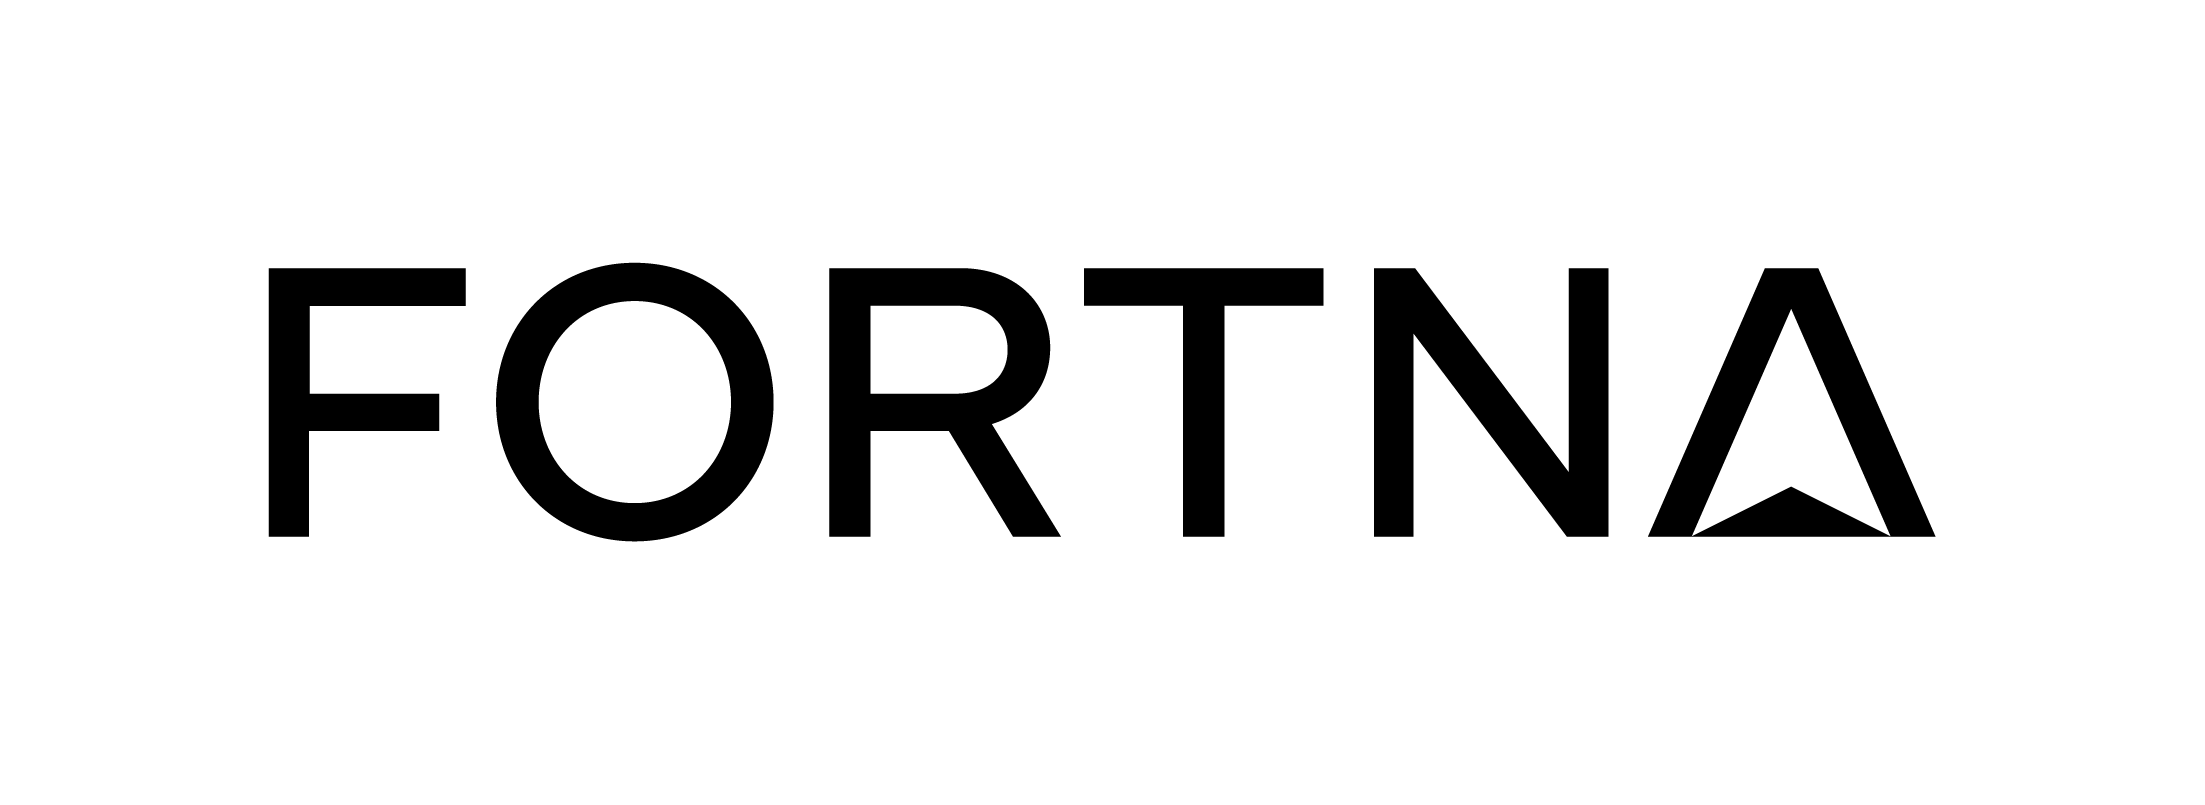 Fortna logo